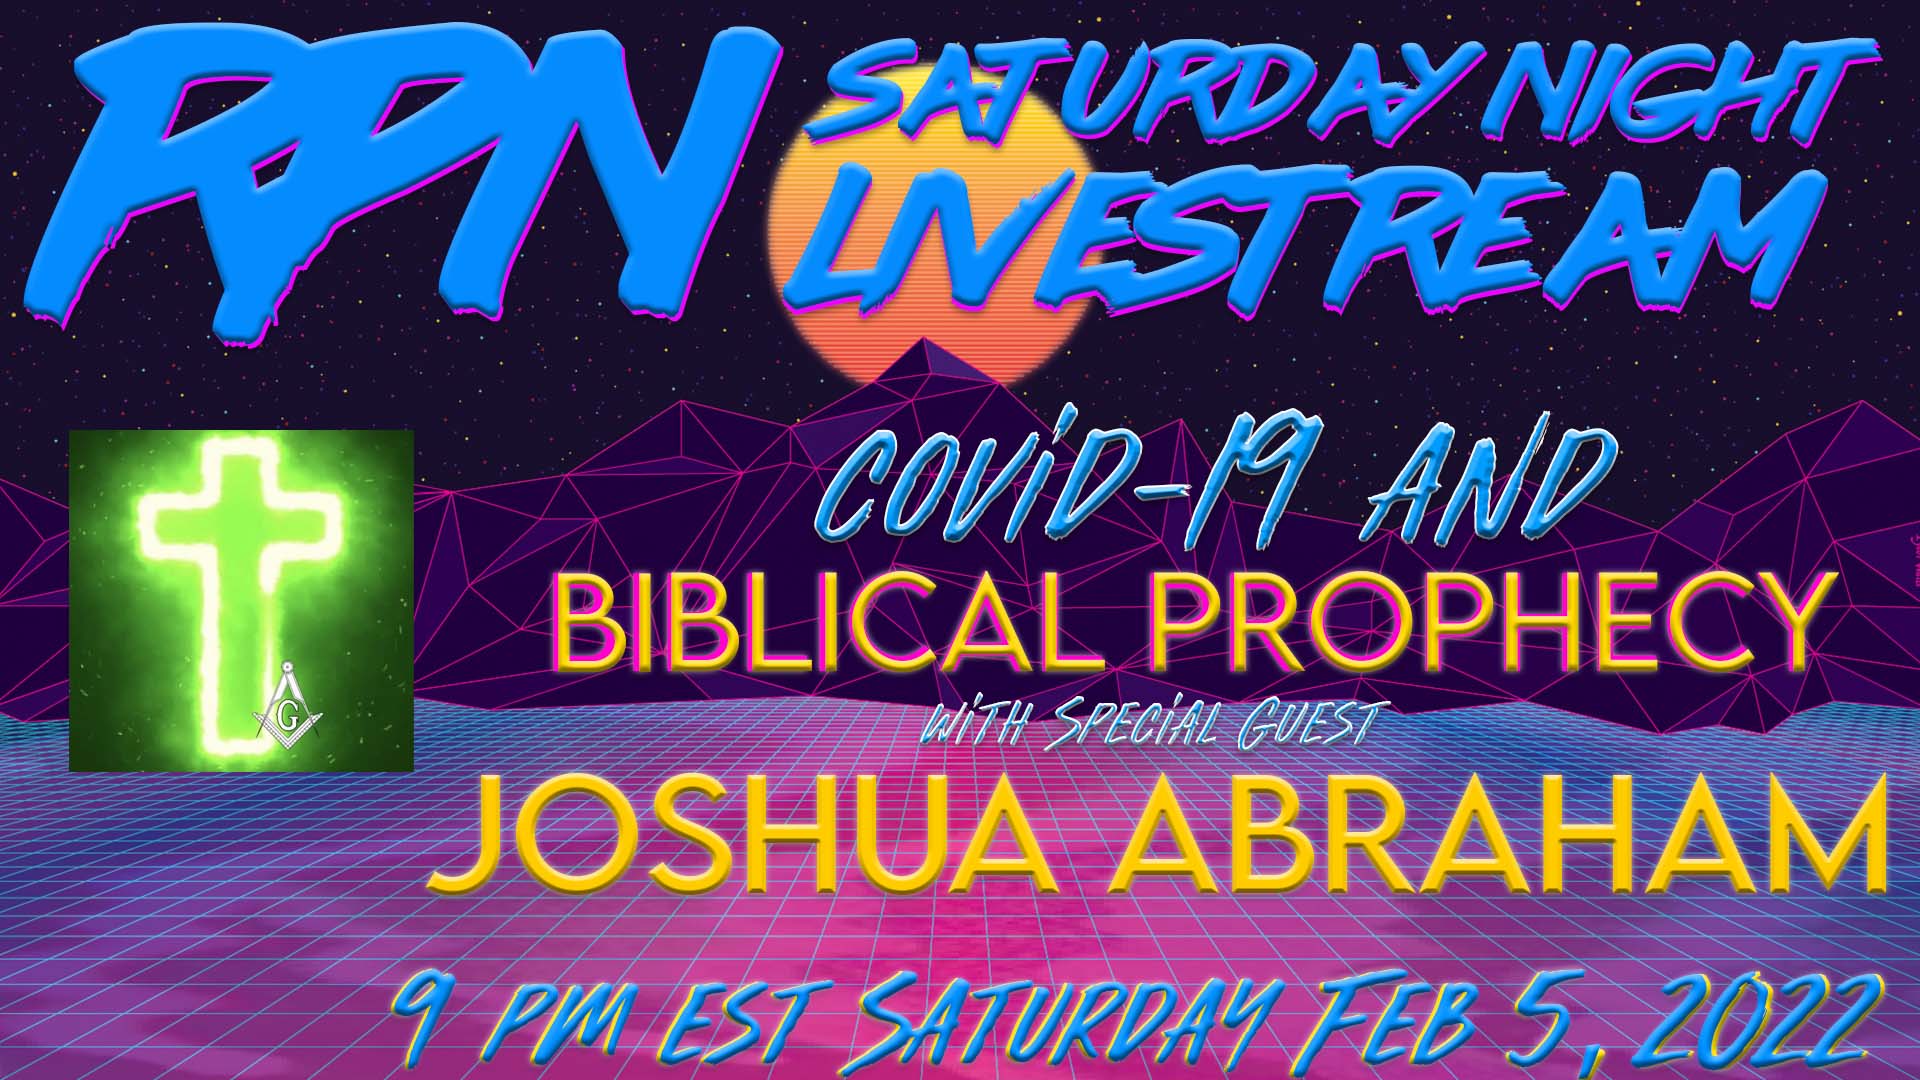 The 4th Industrial Revolution, CV-19 & Biblical Prophecy with Joshua Abraham on Saturday Night Livestream